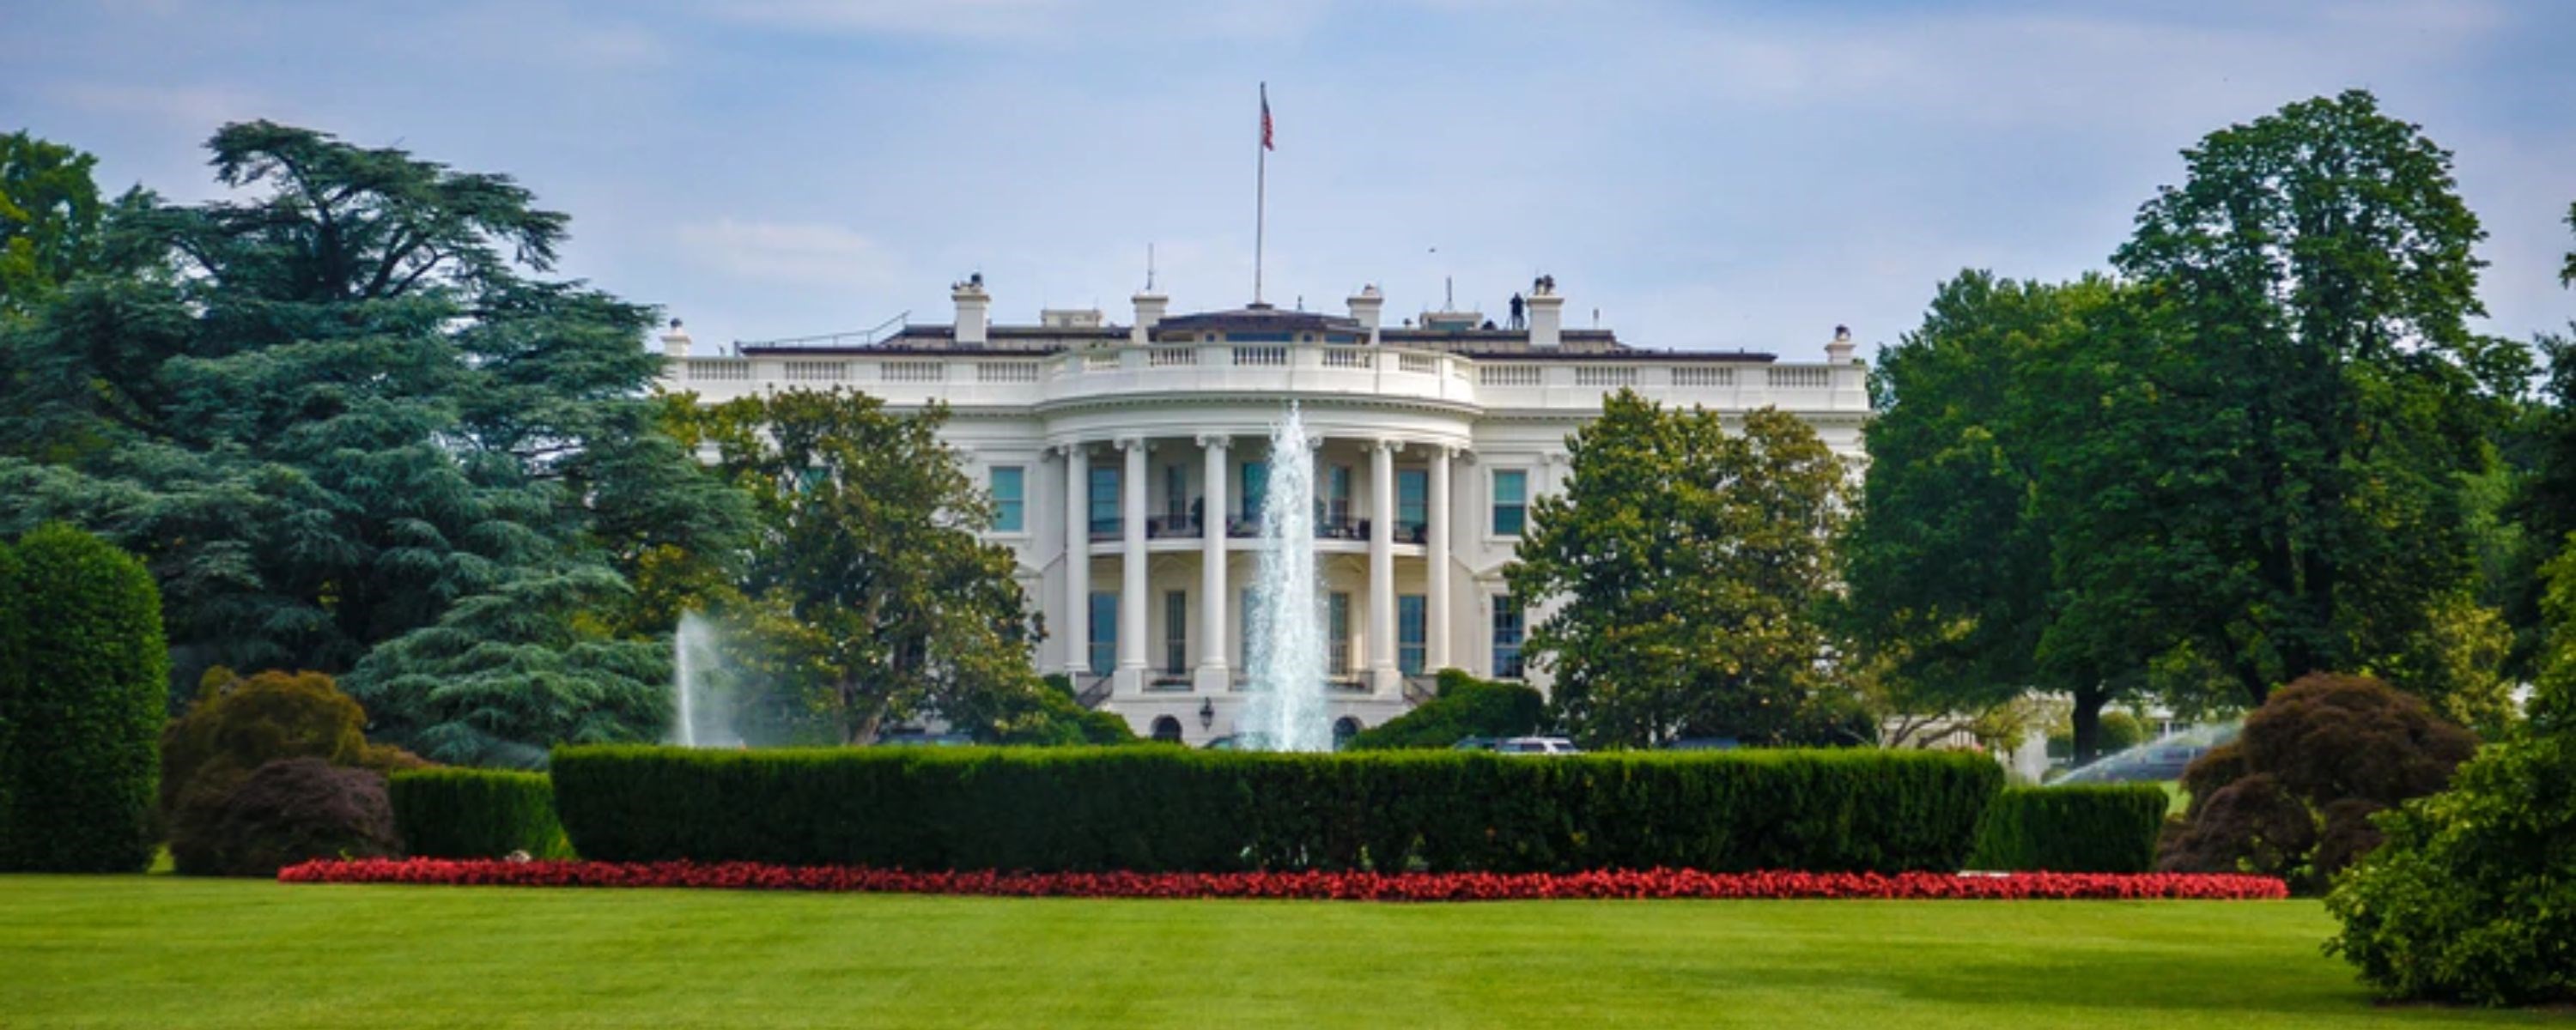 The White House. Photo: David E. Strickler/unsplash.com